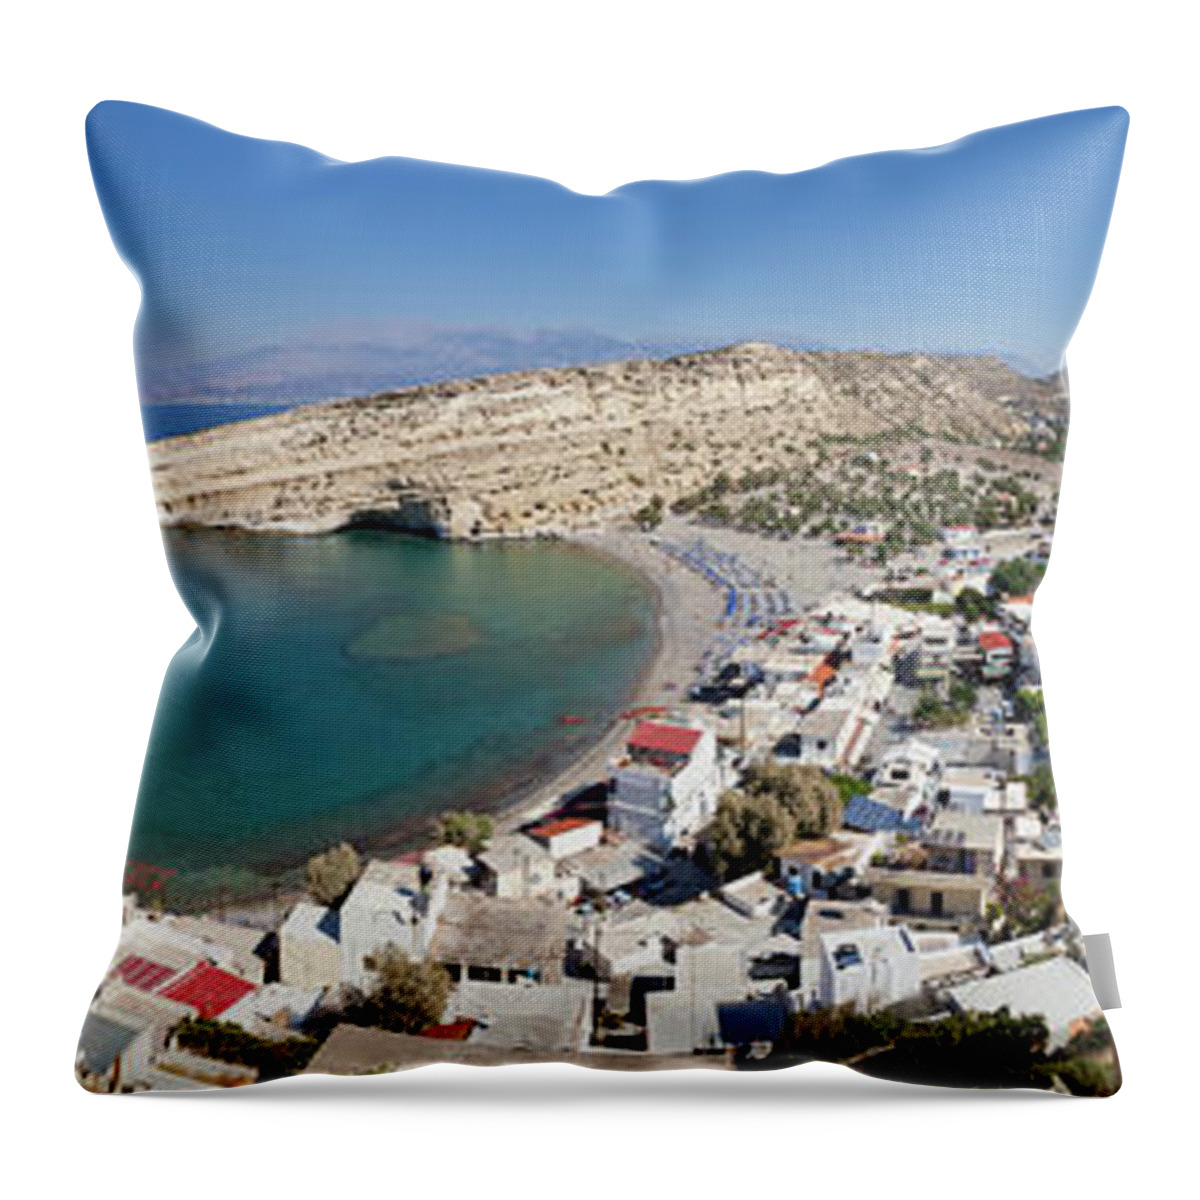 Scenics Throw Pillow featuring the photograph Matala Bay, Crete by Saro17